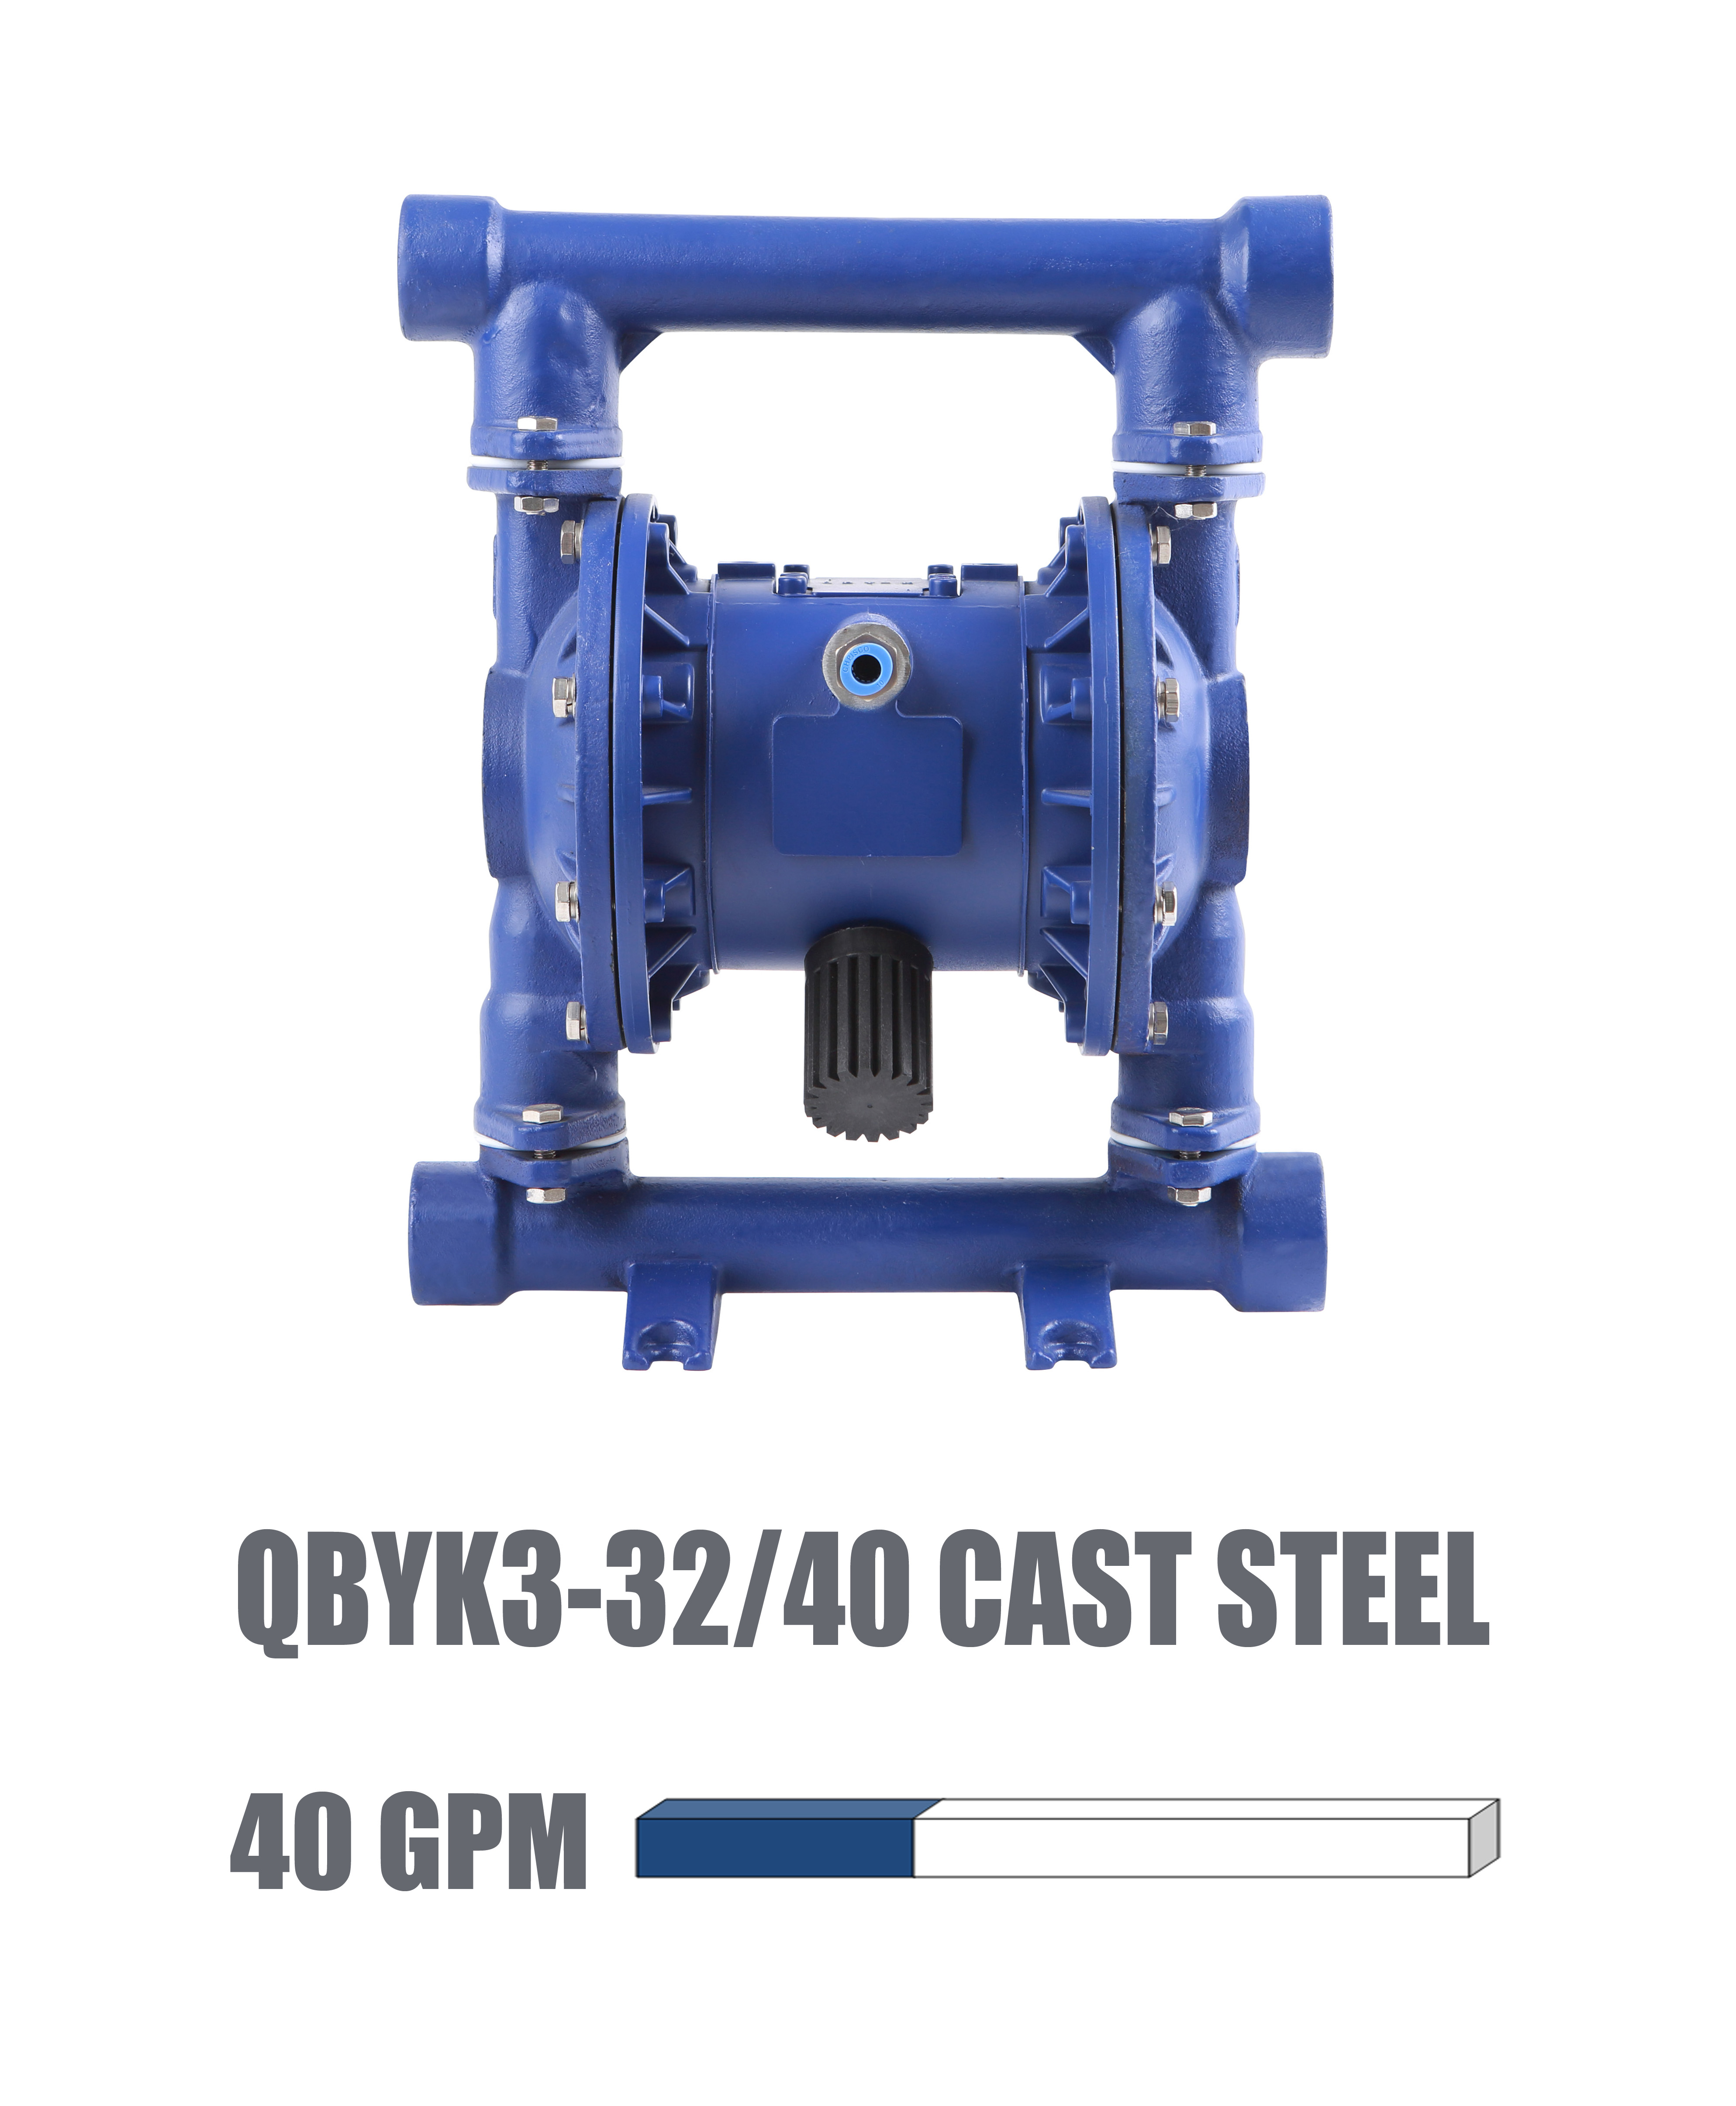 QBYK3-32/40 Cast steel